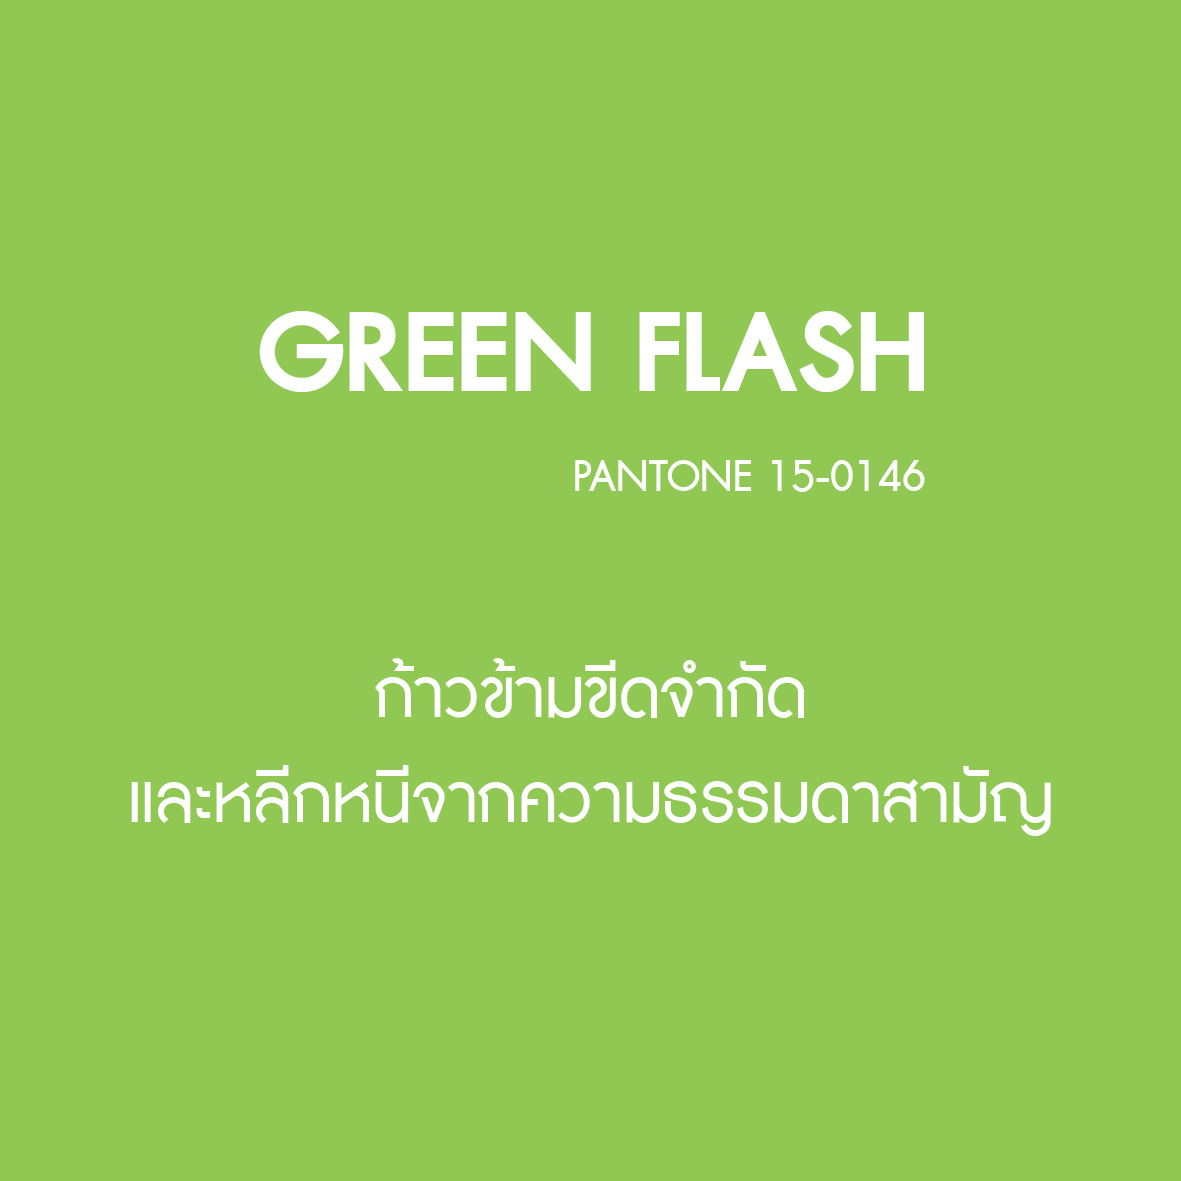 GreenFlash